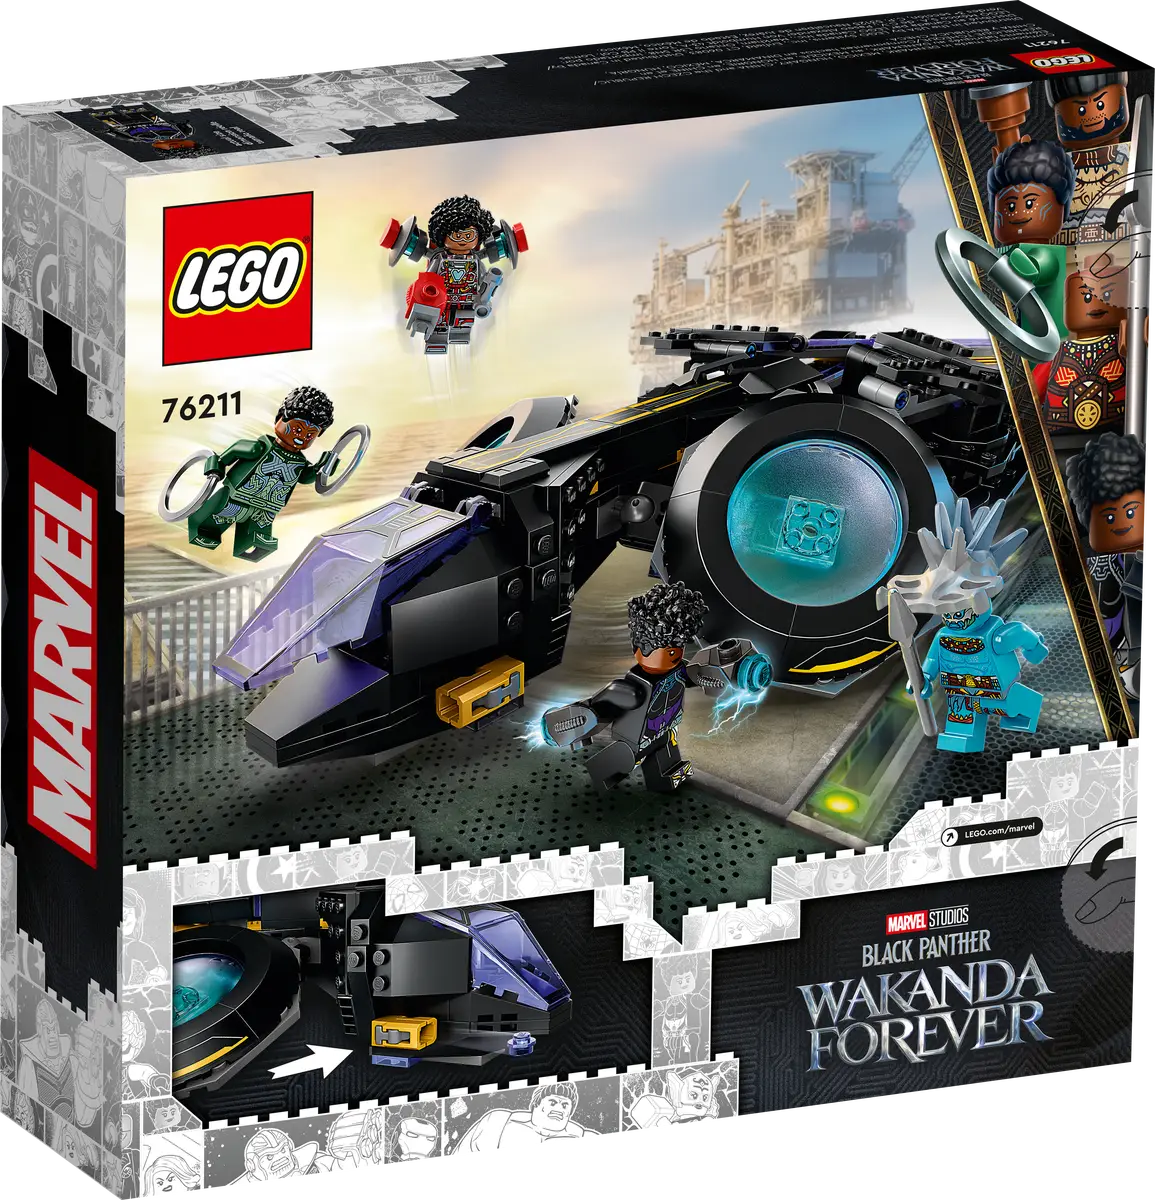 LEGO - Marvel -Black Panther - Shuri's Sunbird - 76211